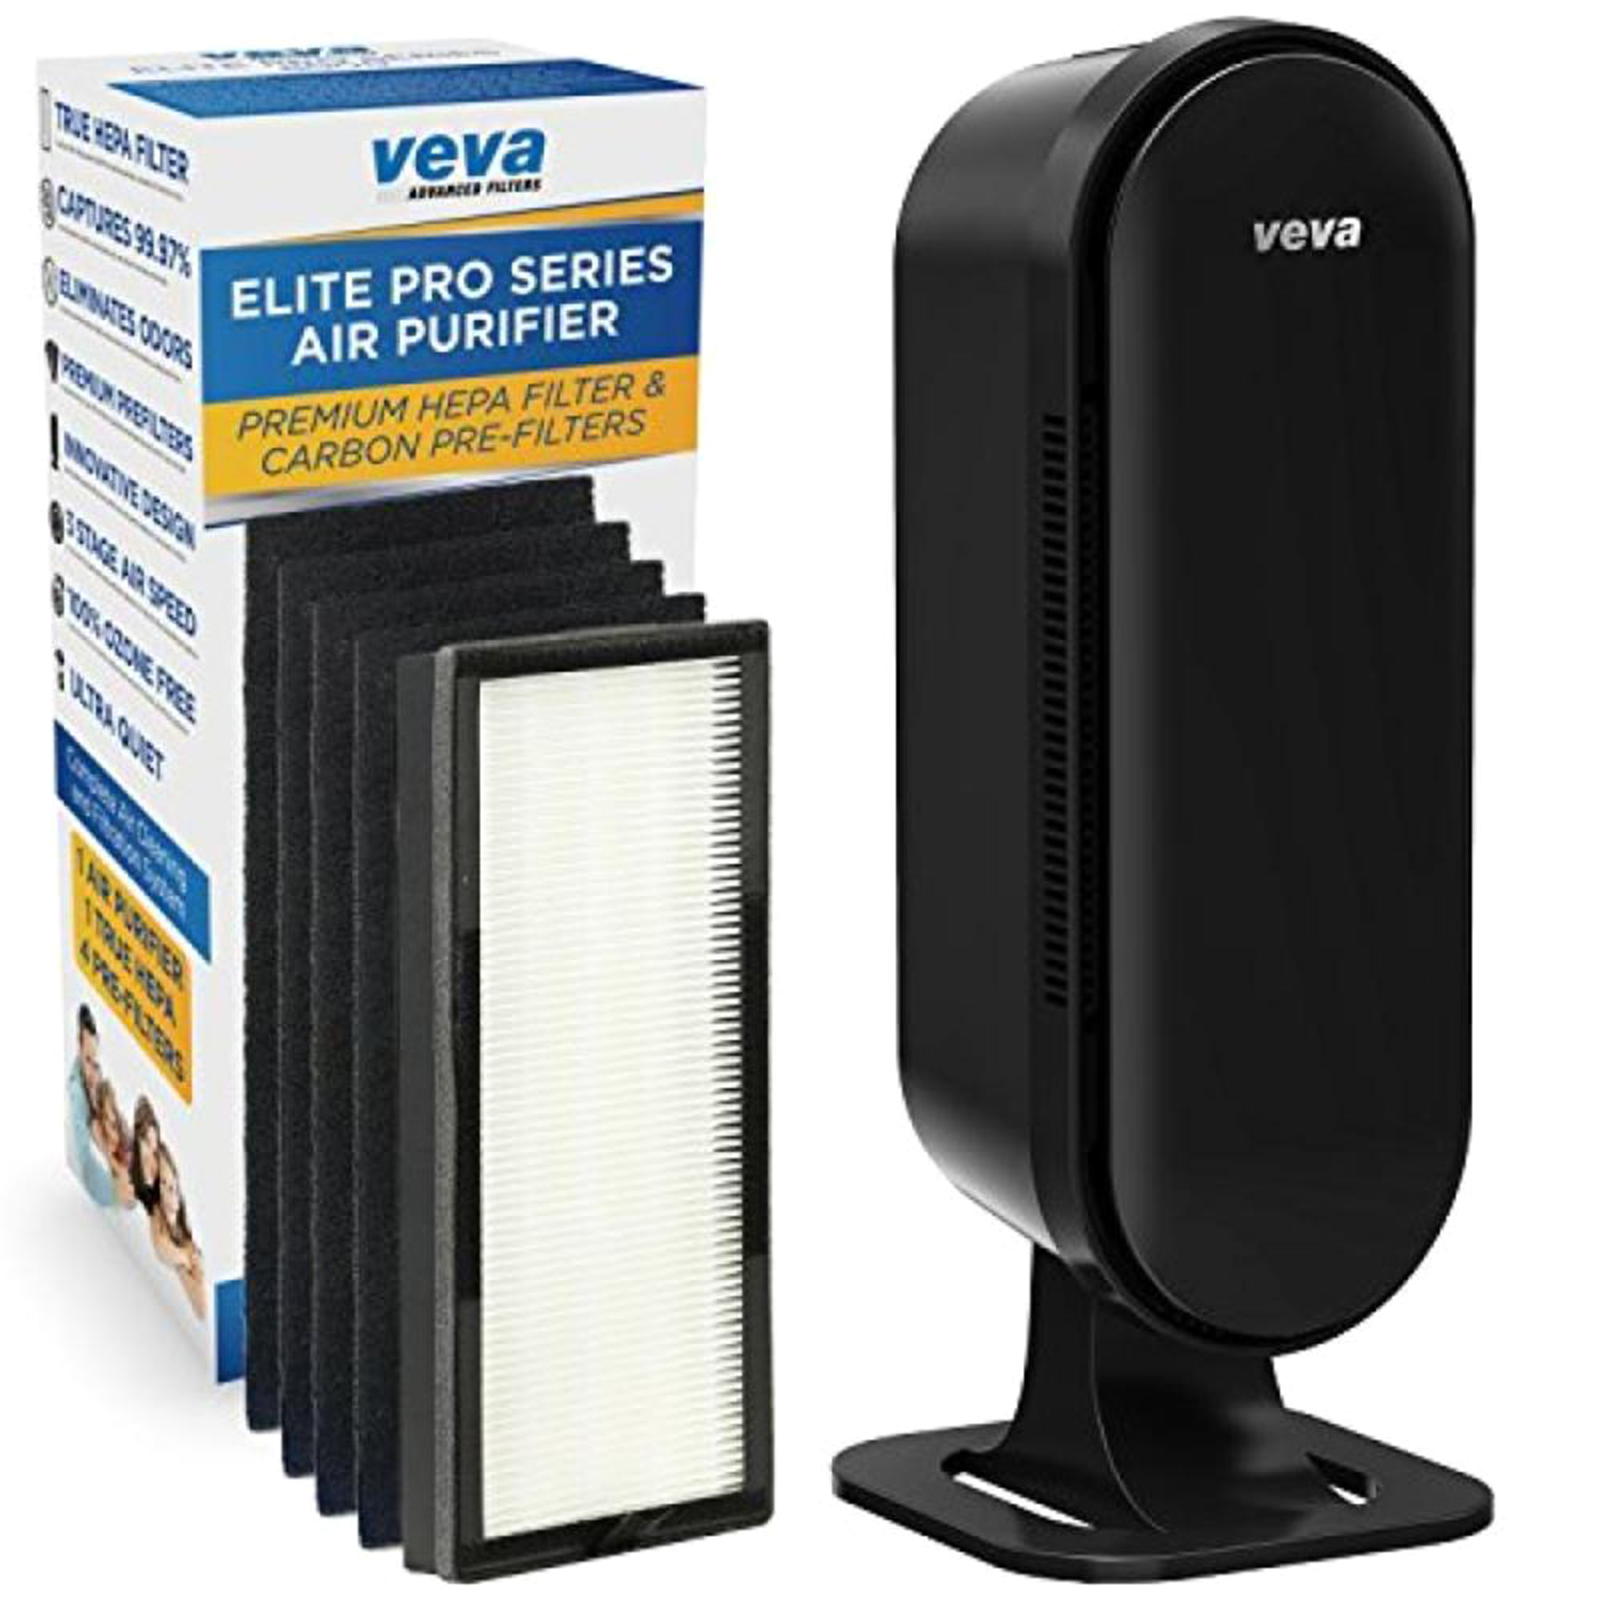 VEVA VEVA8000 8000 Elite Pro Series True HEPA Air Purifier with 4 Activated Carbon Pre-Filters